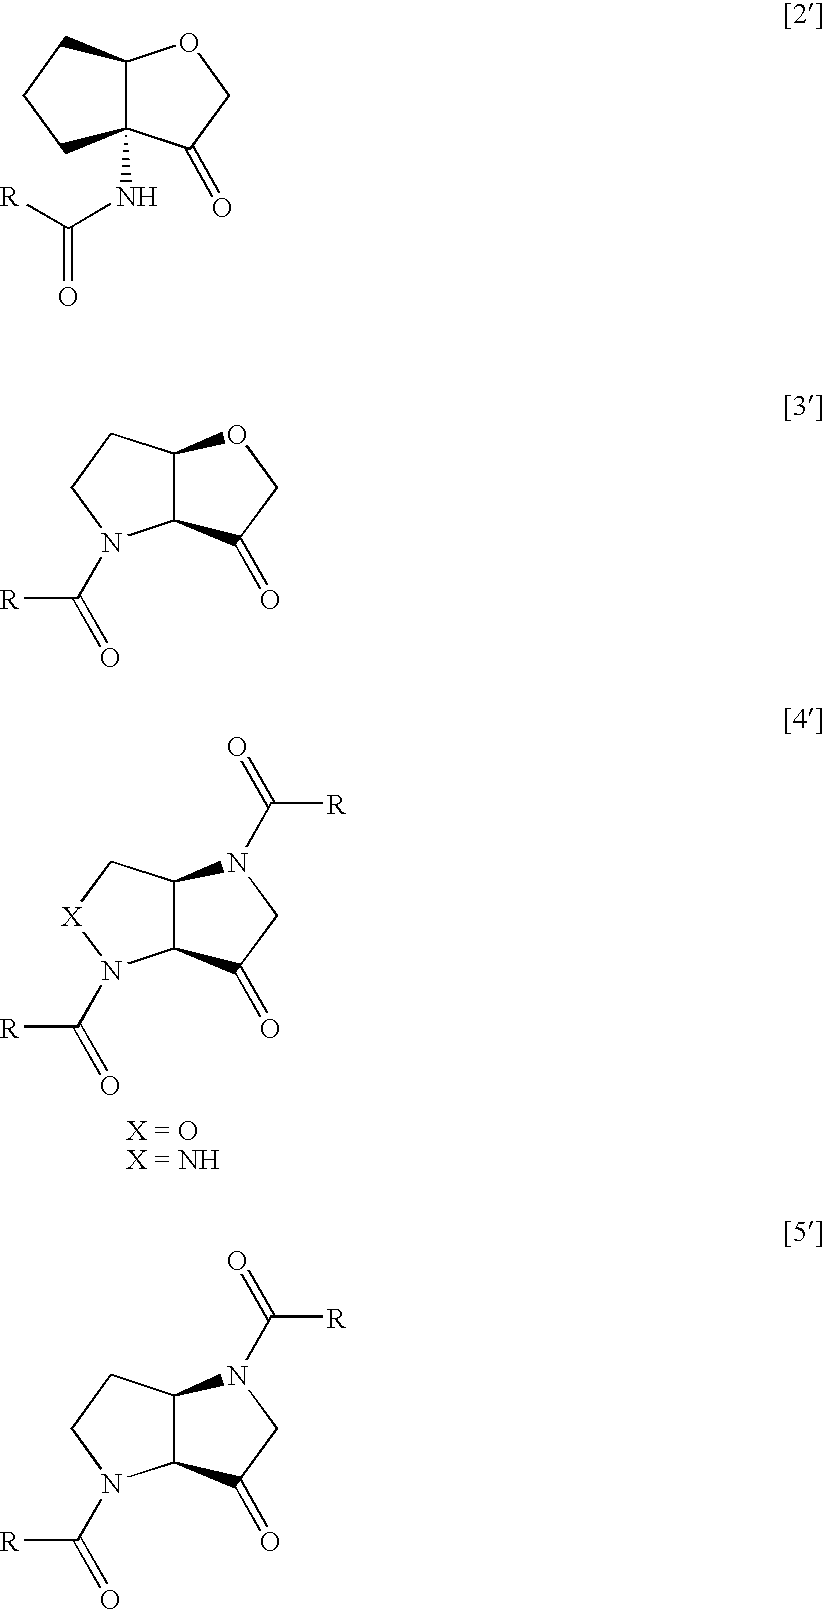 Tetrahydrofuro(3,2-B) pyrrol-3-one derivatives as inhibitors of cysteine proteinases